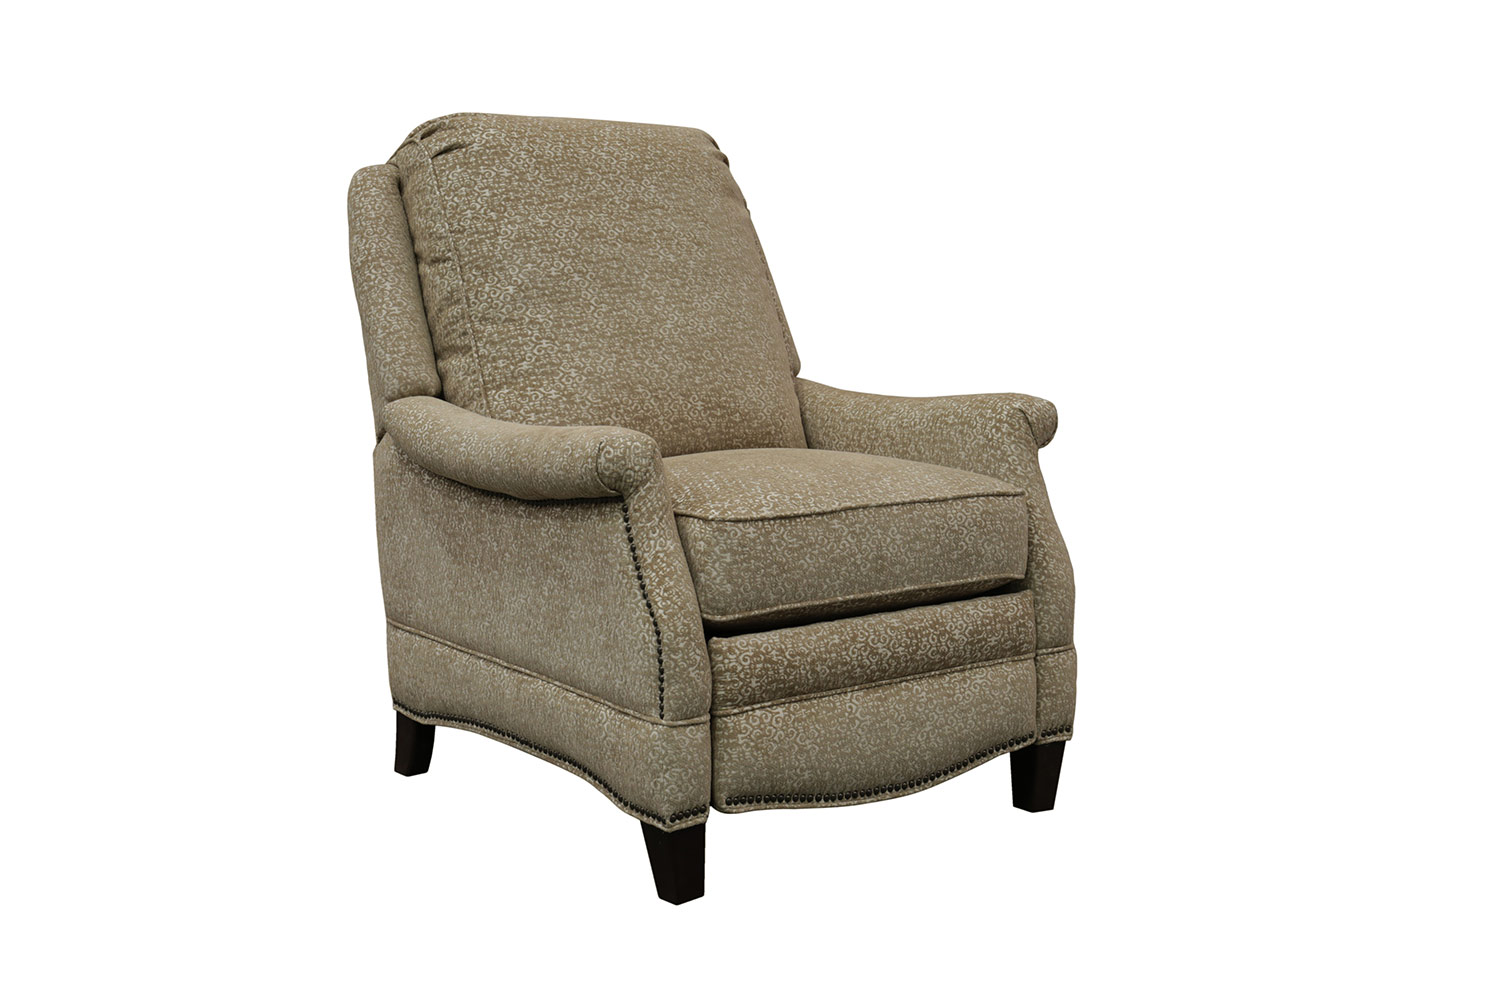 Barcalounger Ashebrooke Recliner Chair - Sandcastle/fabric